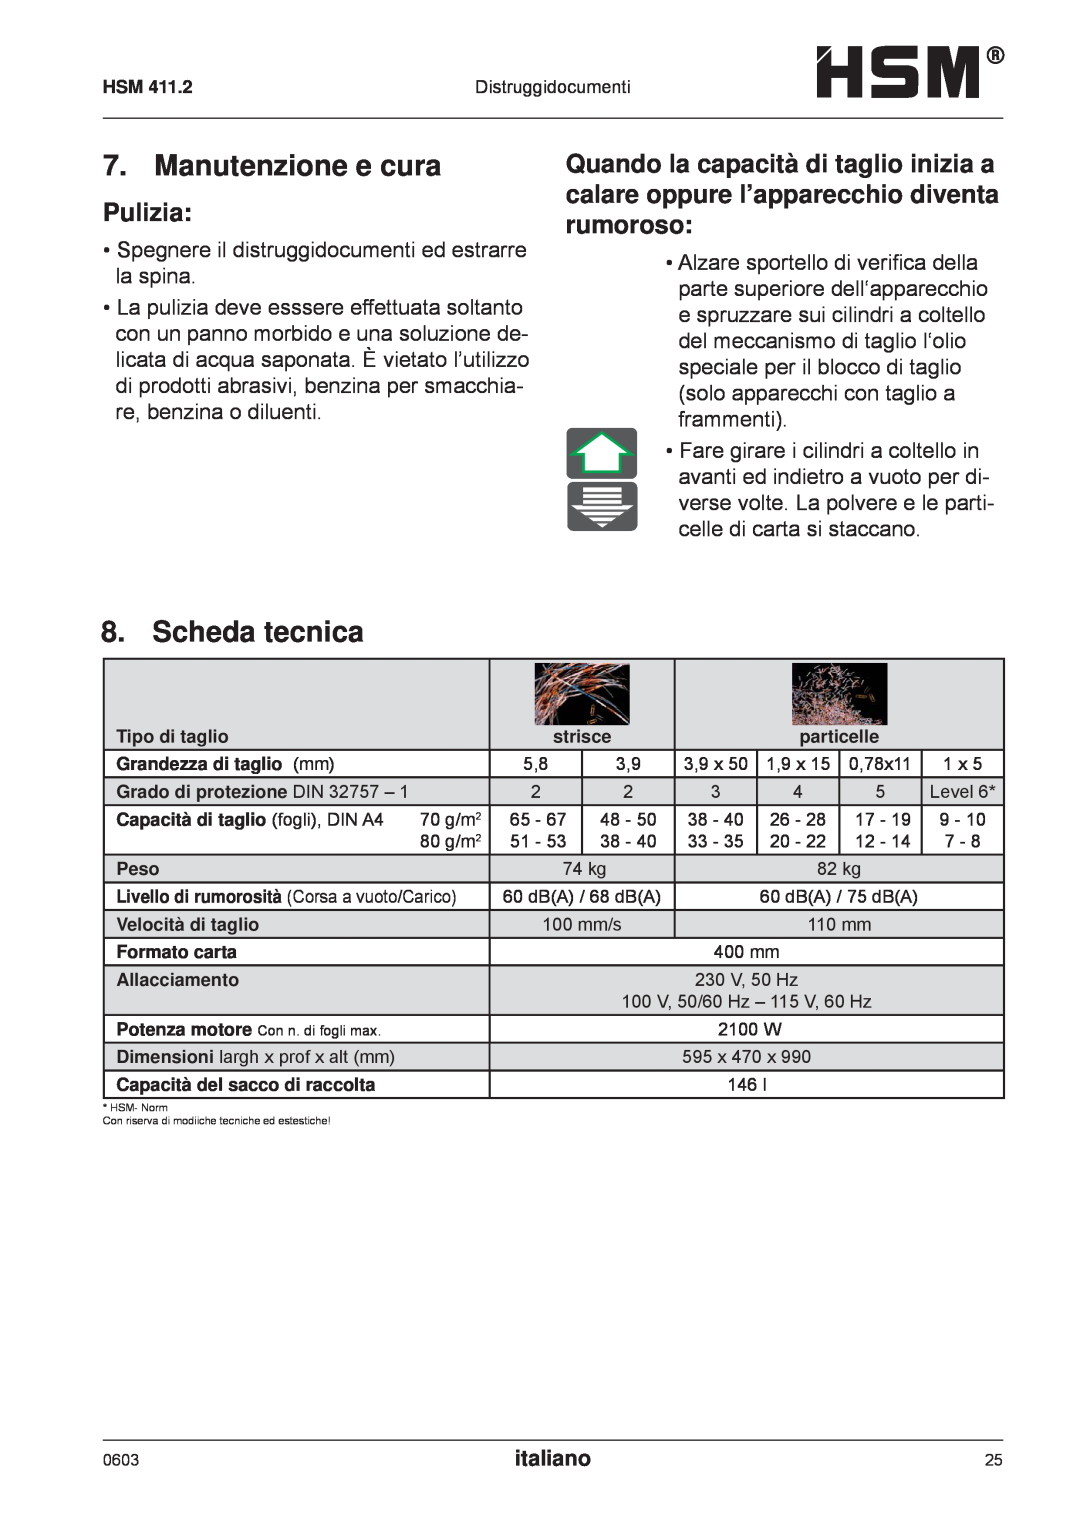 HSM HSM 411.2 operating instructions Manutenzione e cura, Scheda tecnica, Pulizia, italiano 